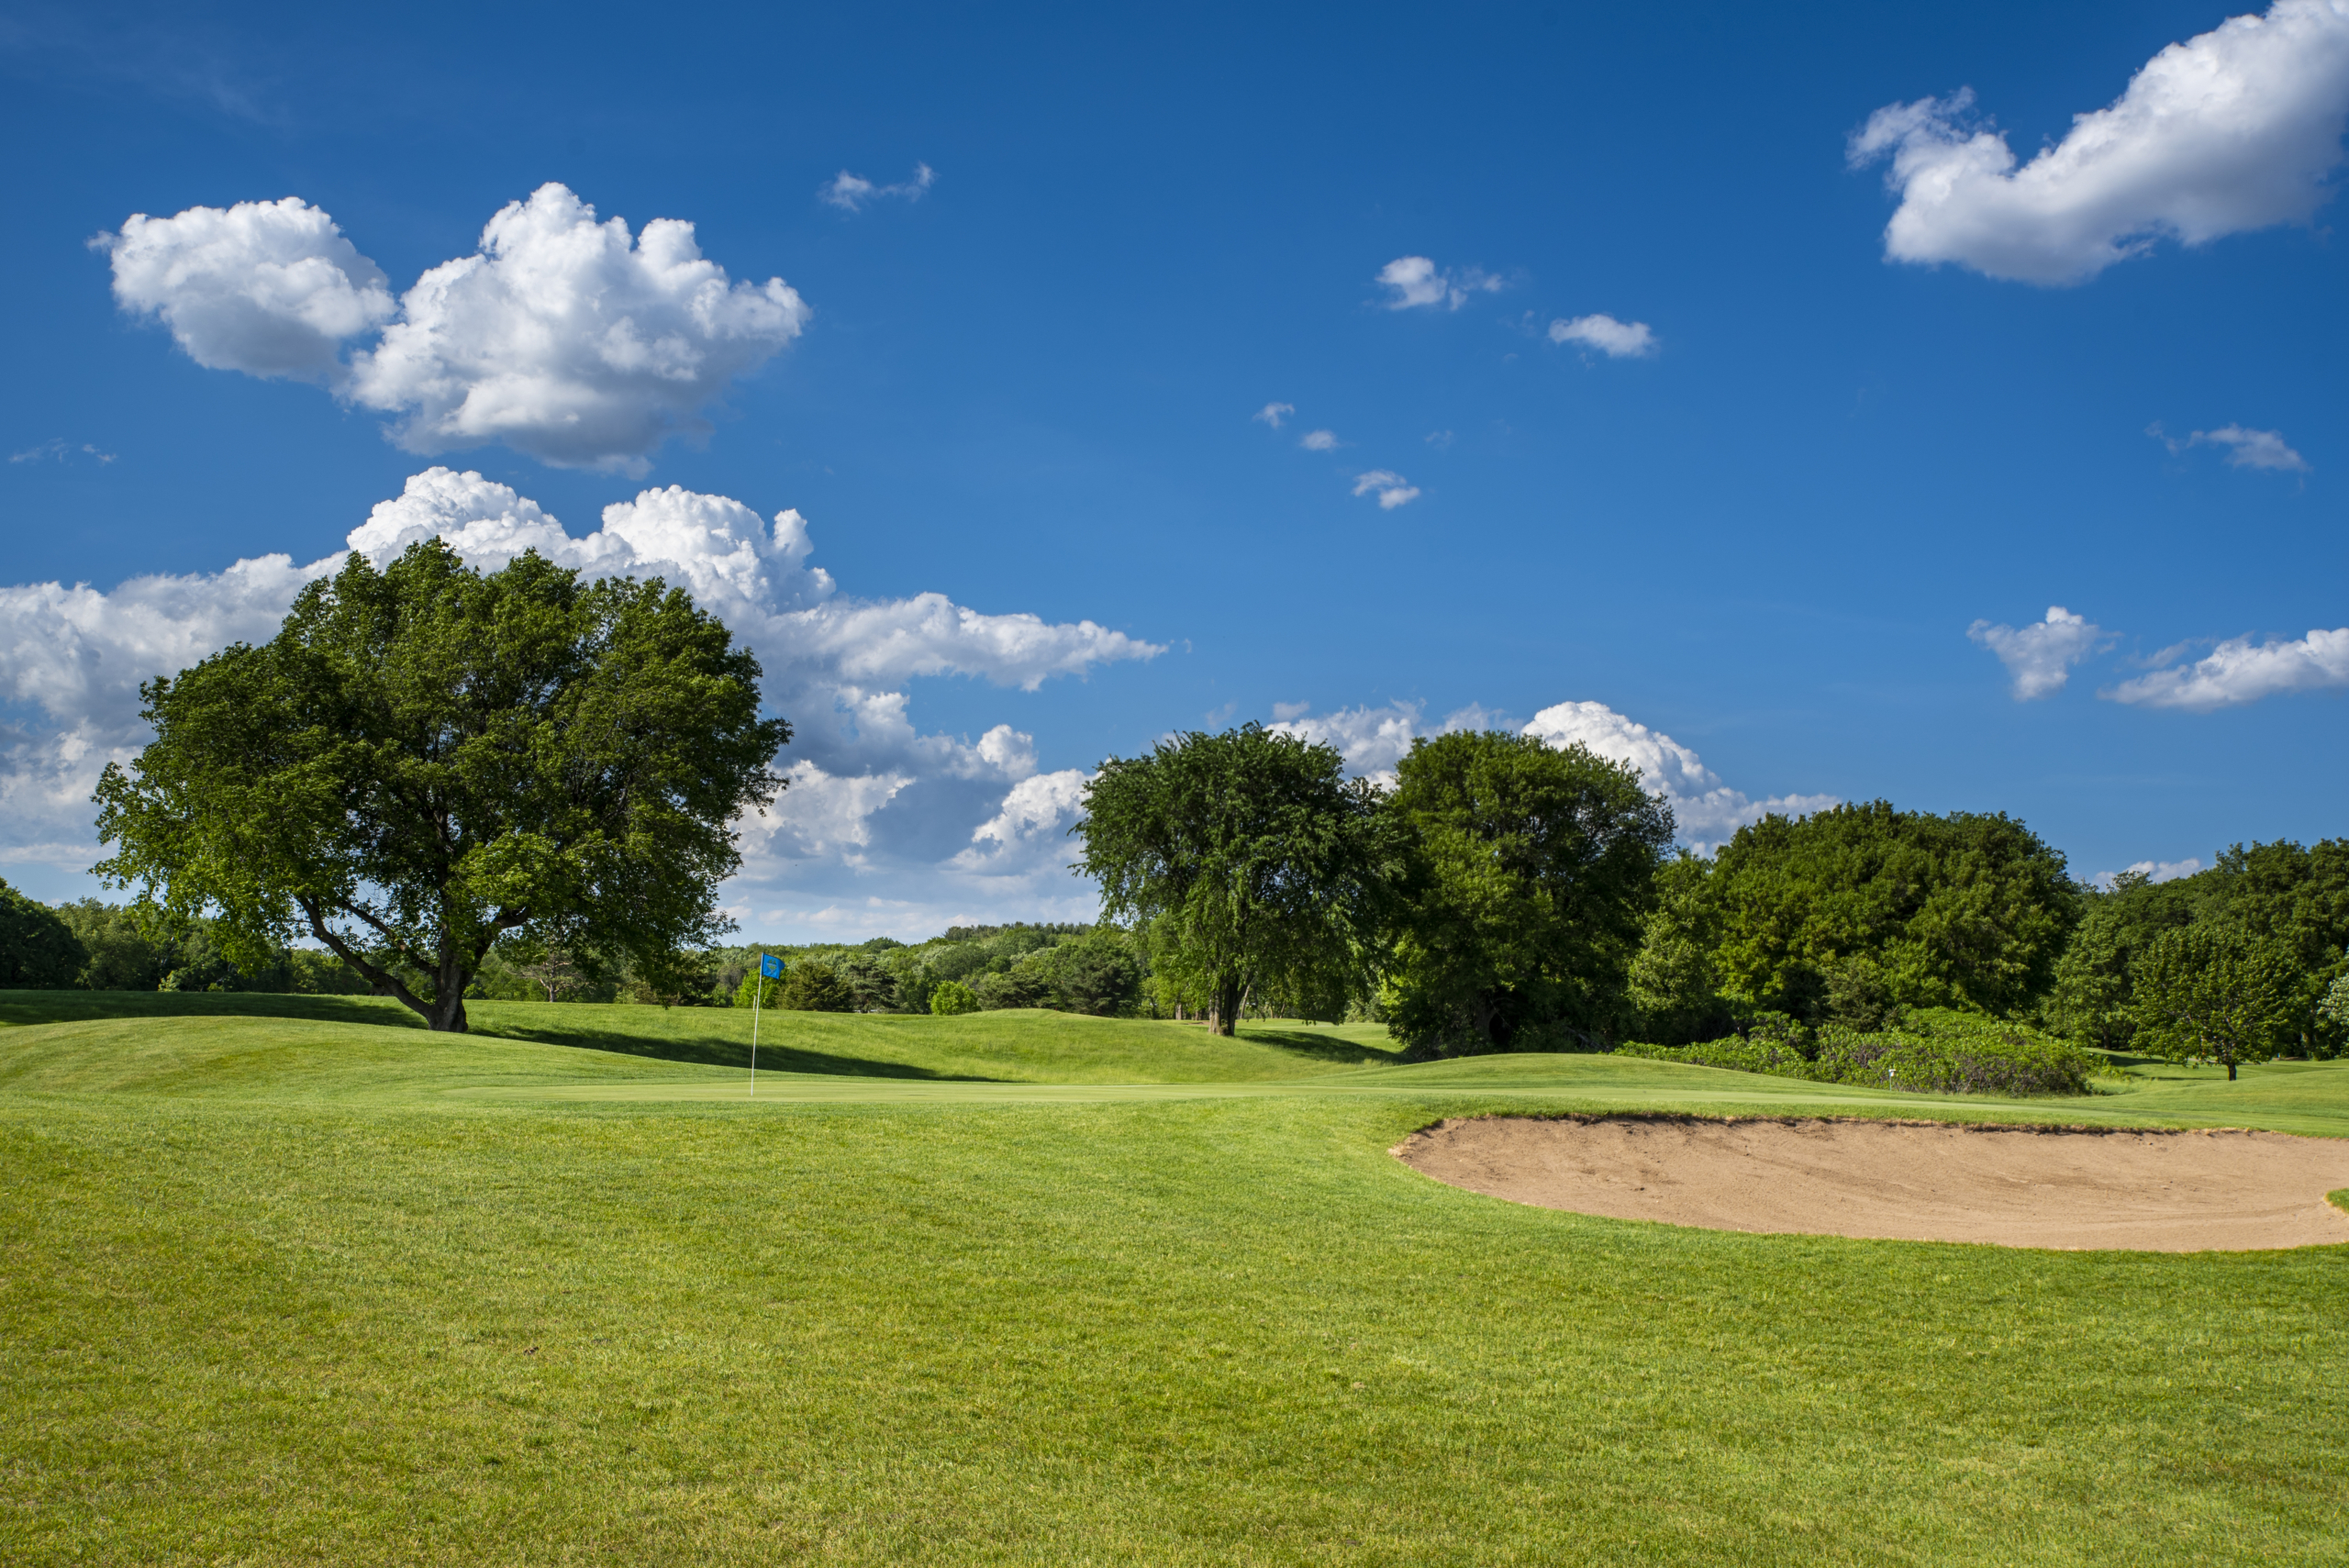 Golf Course Near Me | Minneapolis - St. Paul Metro Area | River Oaks Golf Course & Event Center in Cottage Grove, MN